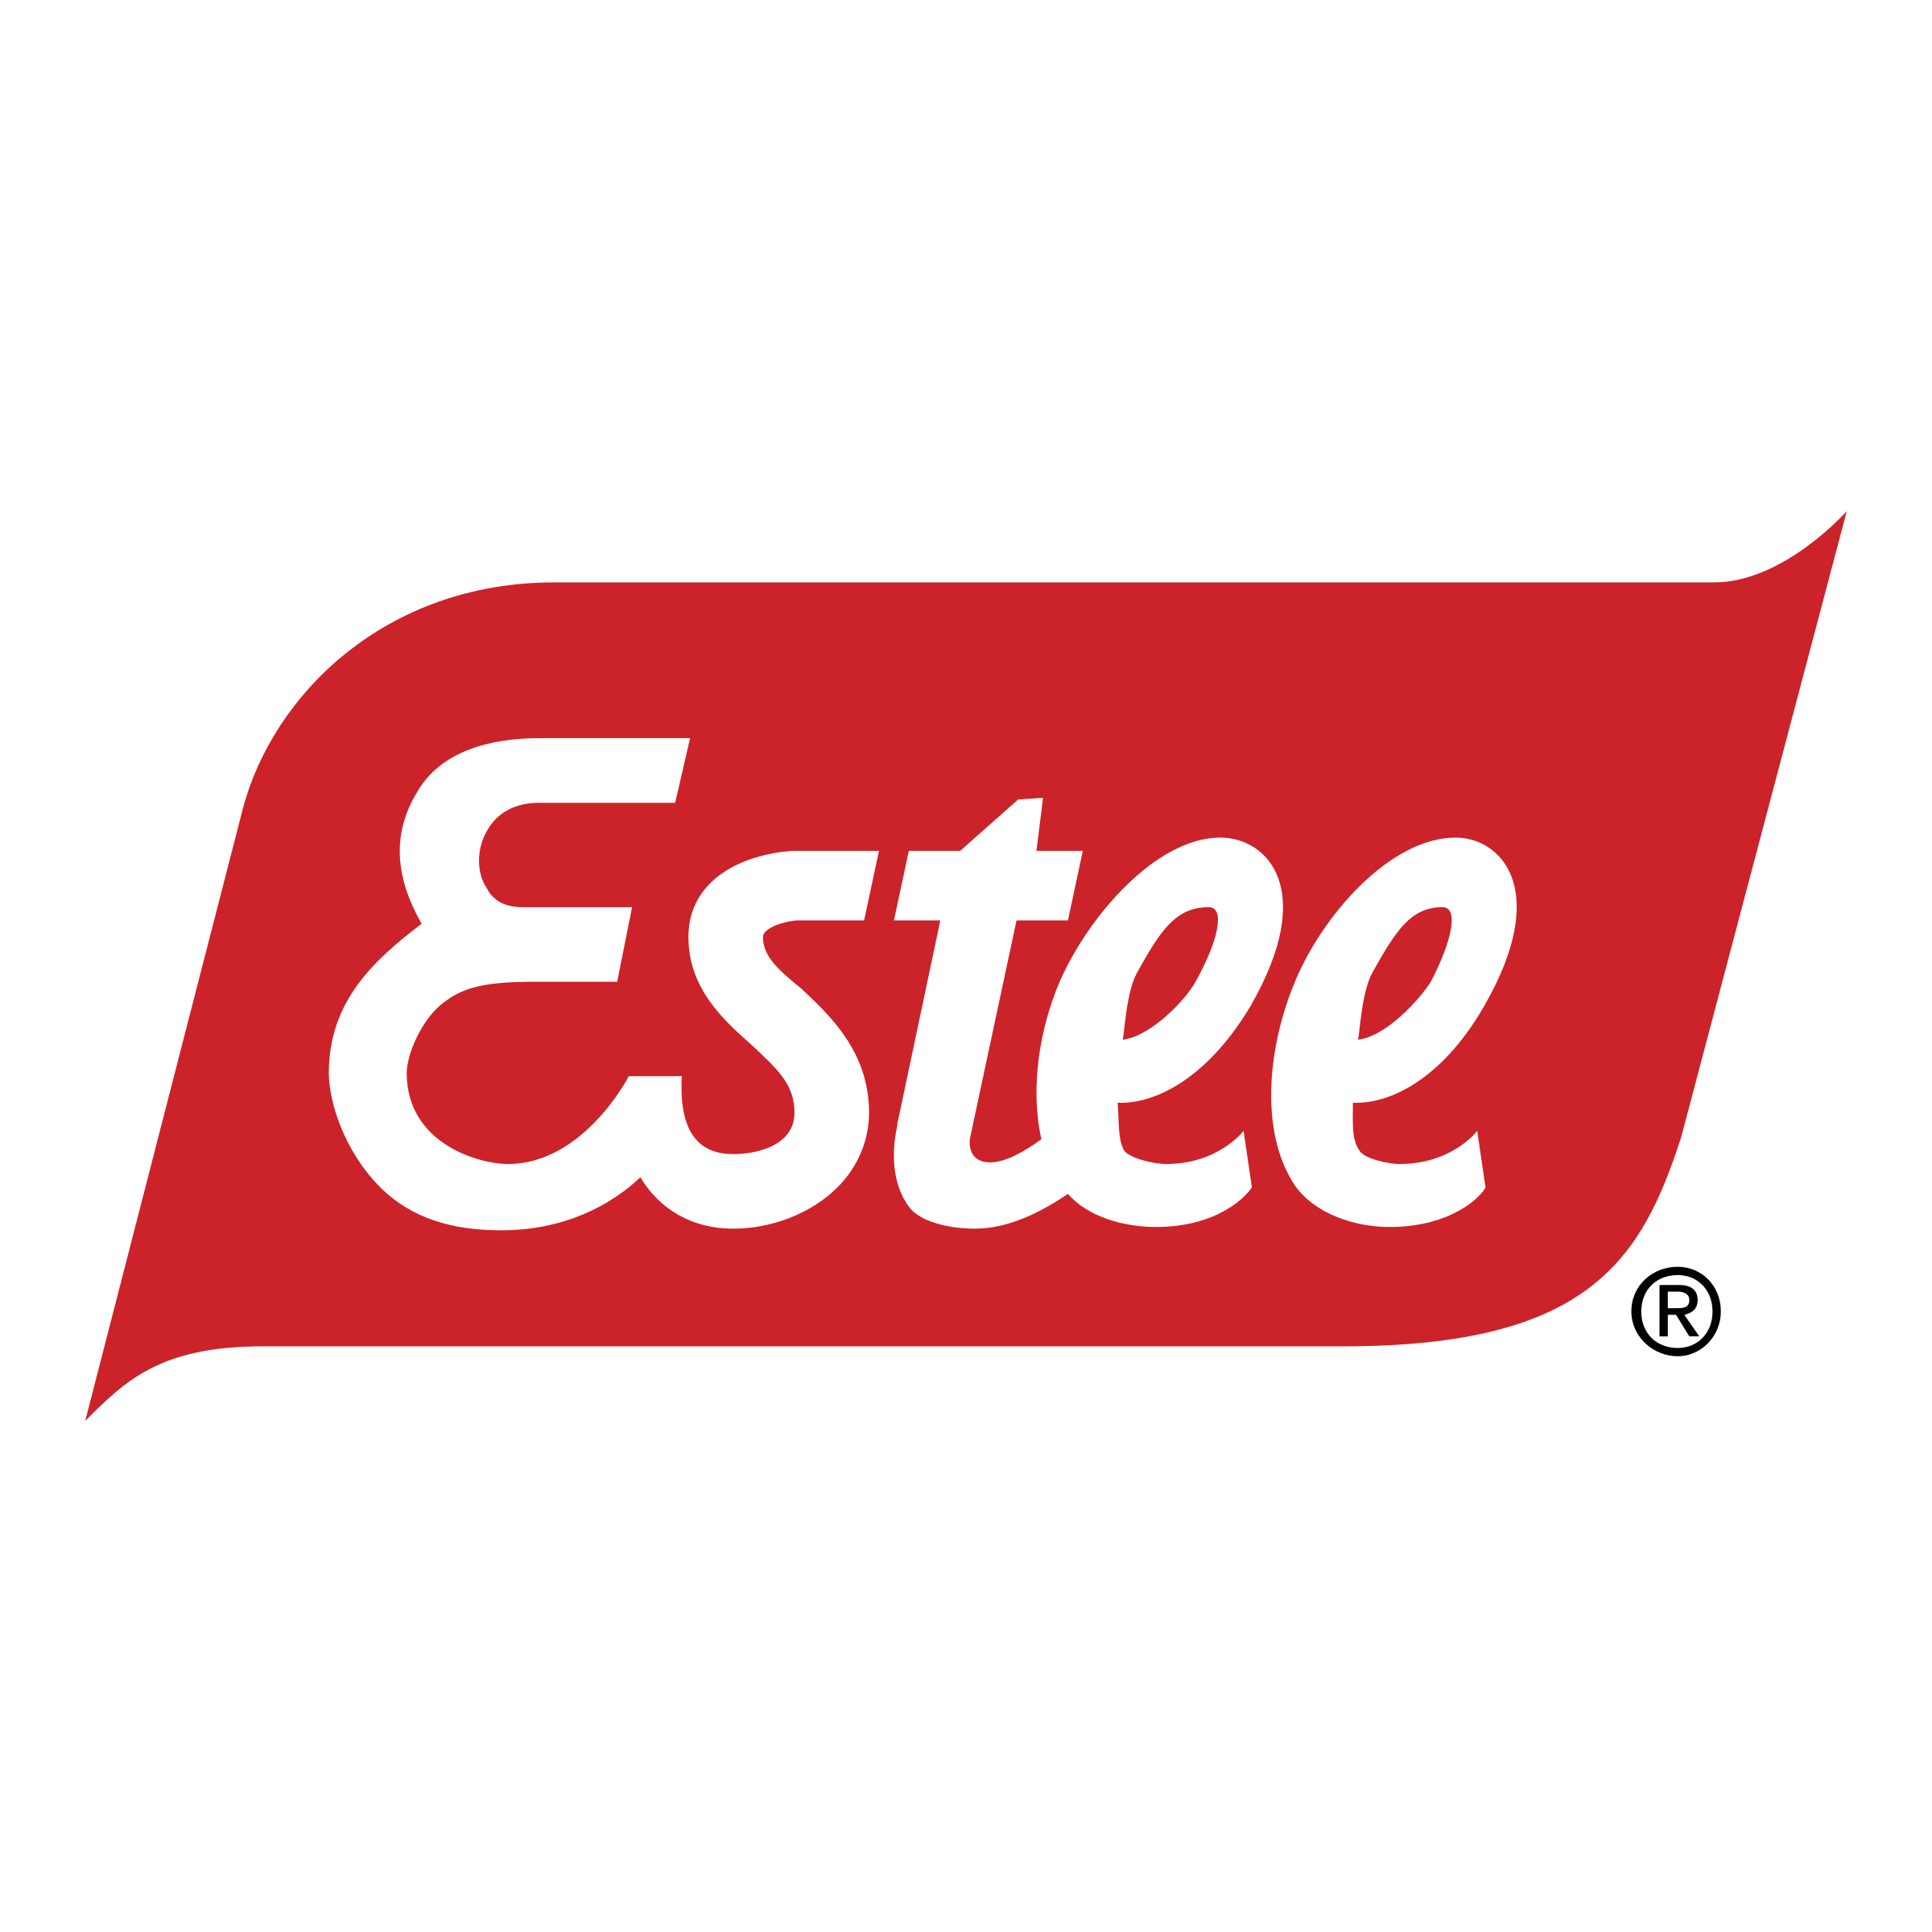 Estee Logo - Estee Logo PNG Transparent & SVG Vector - Freebie Supply